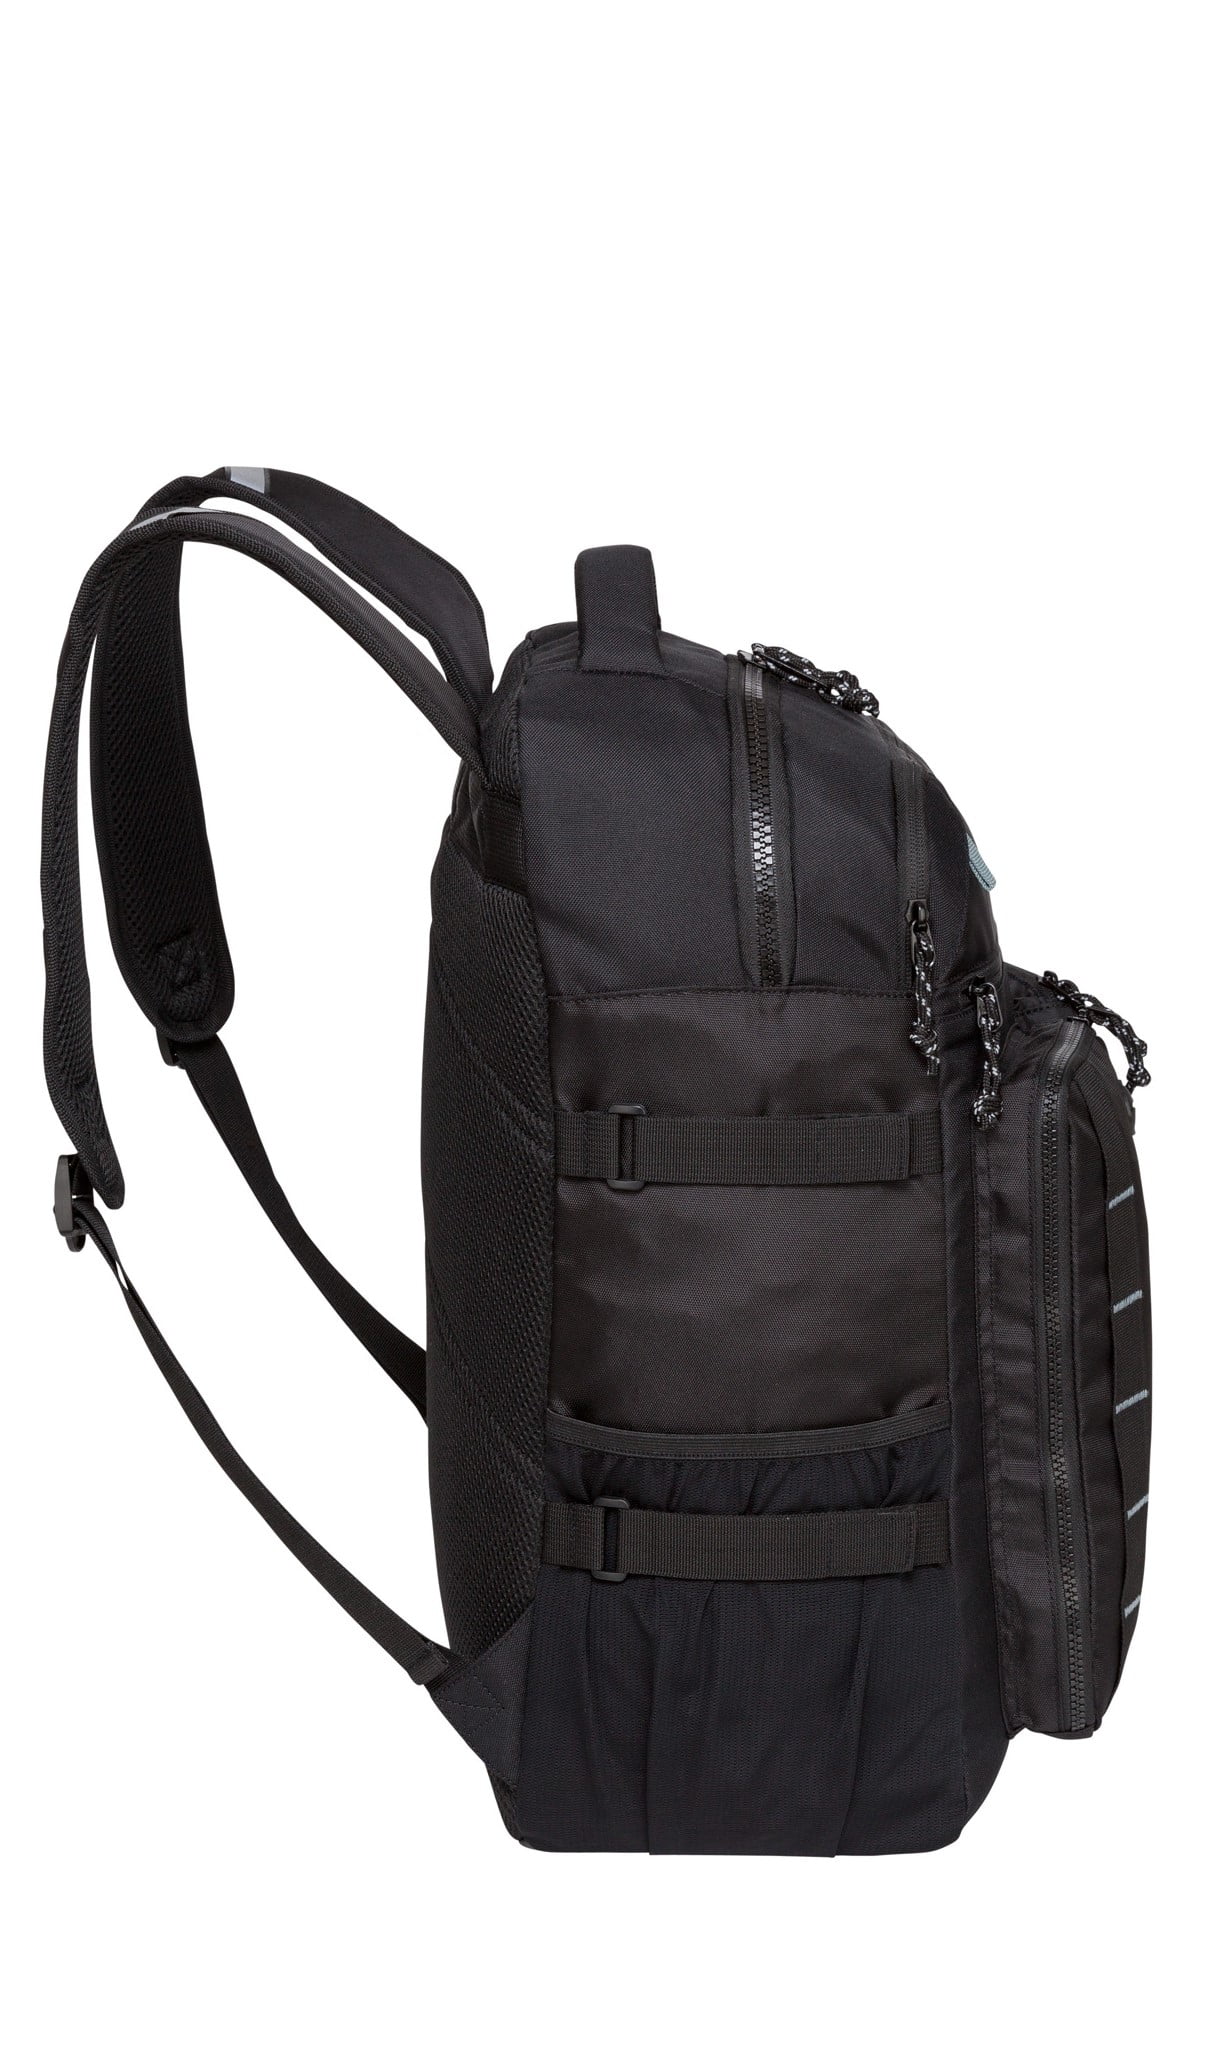 SwissTech Lucerne Travel School Backpack with Laptop Tablet Sleeve Black 